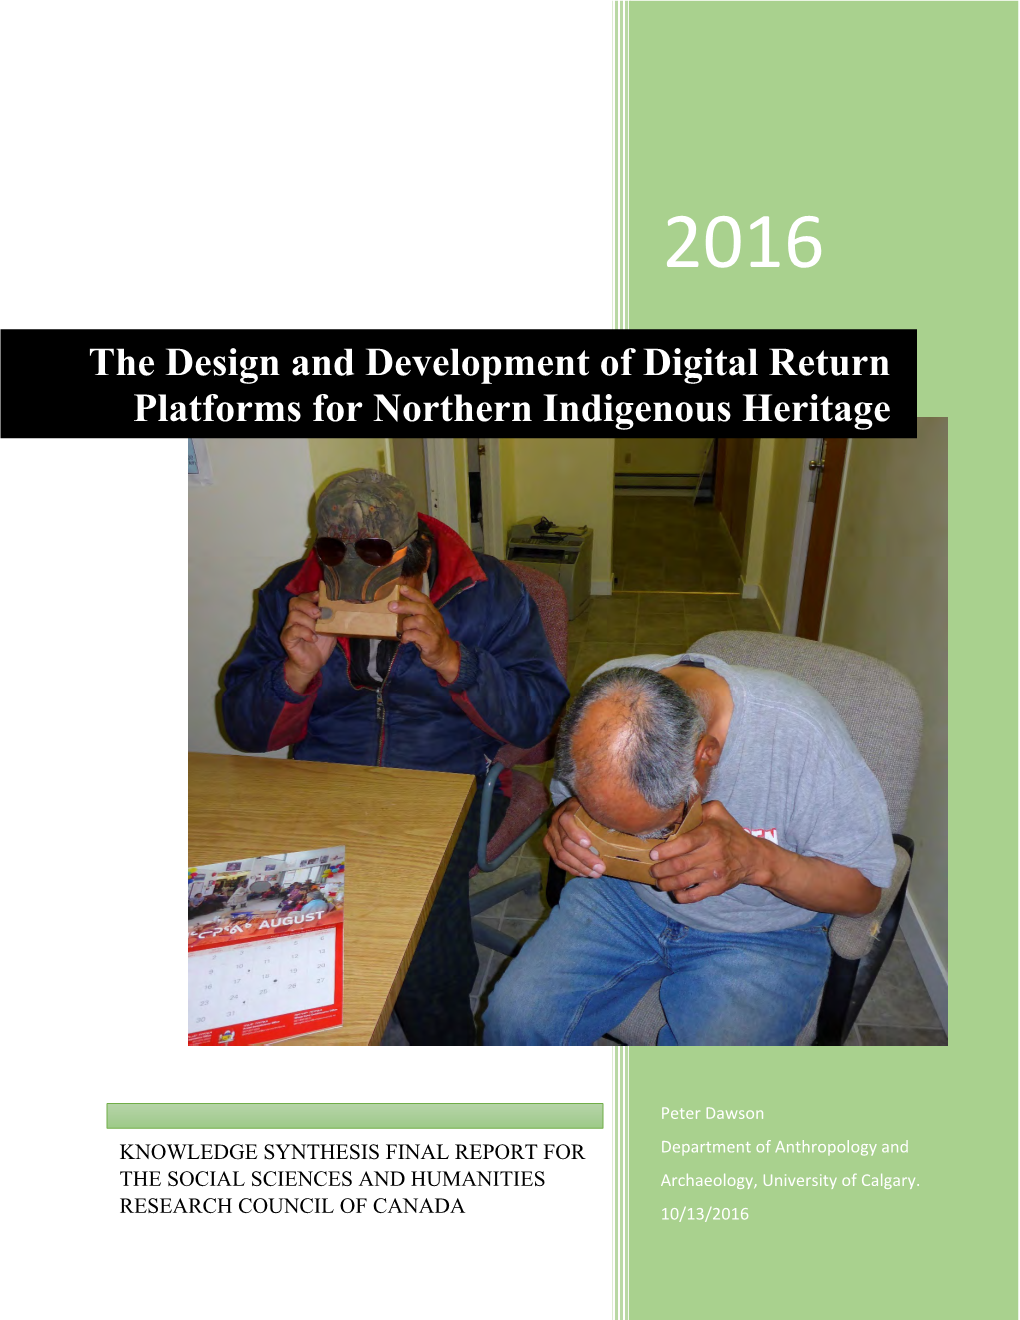 The Design and Development of Digital Return Platforms for Northern Indigenous Heritage